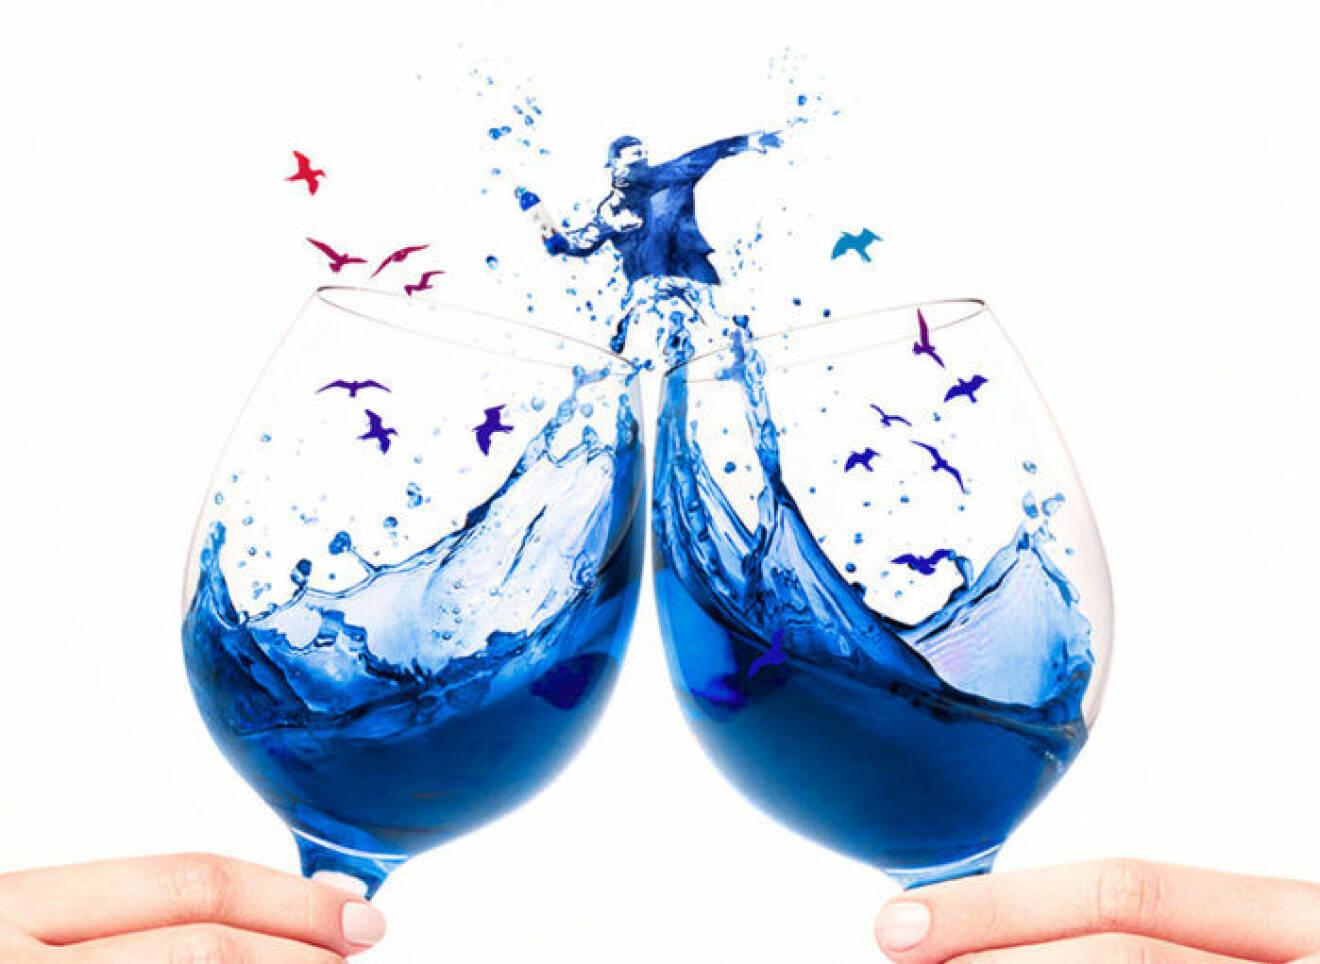 Har du testat blått vin?